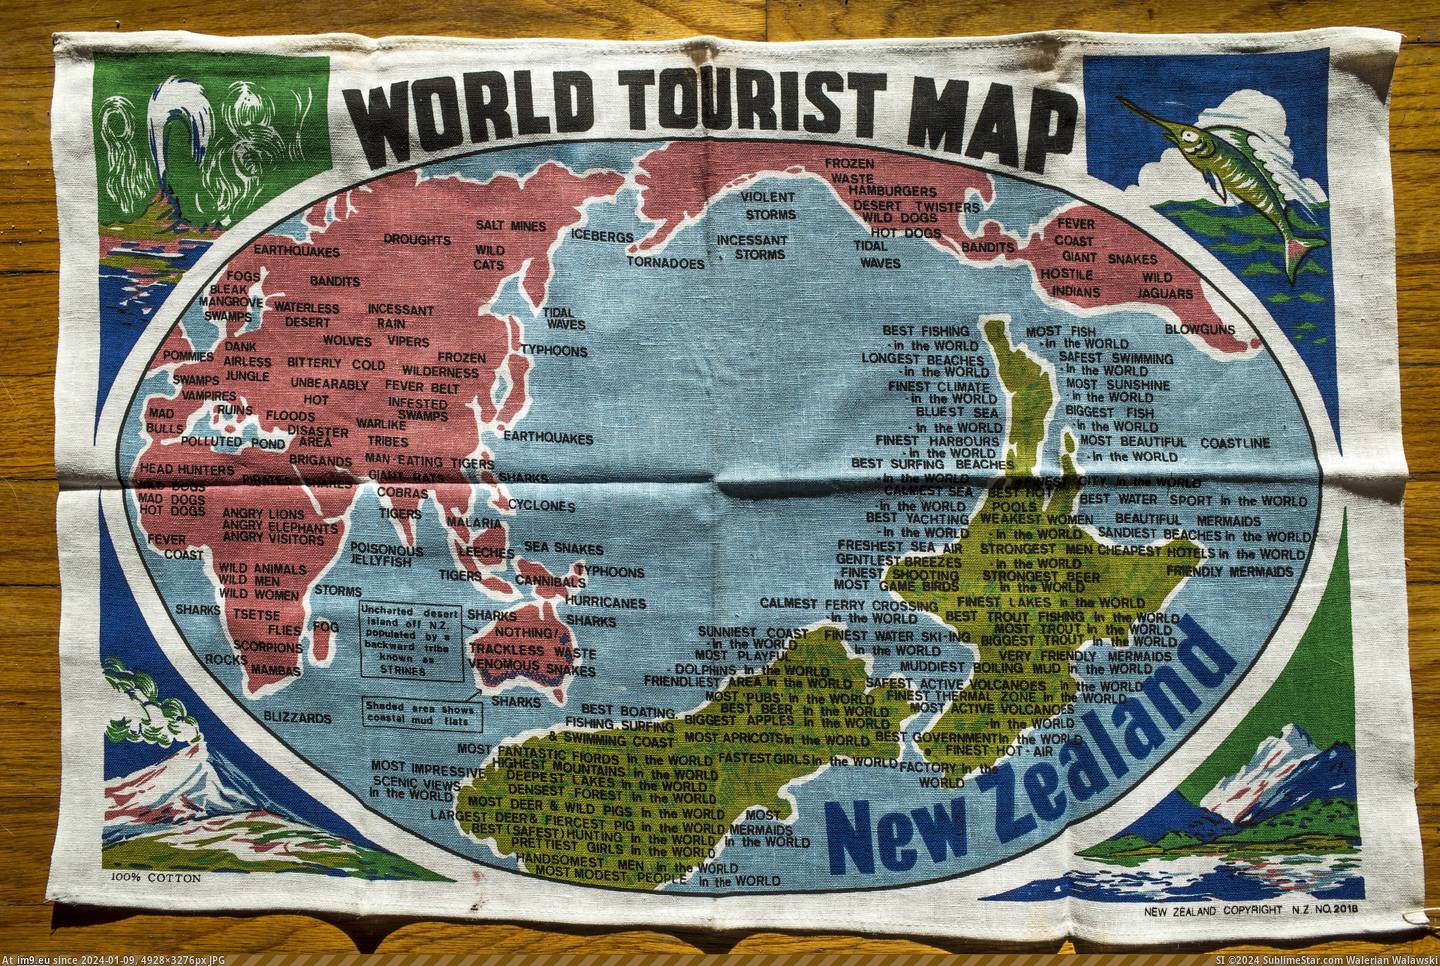 #World #Map #4928x3264 #Zealand #Perspective [Mapporn] World Tourism Map, New Zealand's perspective [4928x3264] Pic. (Bild von album My r/MAPS favs))